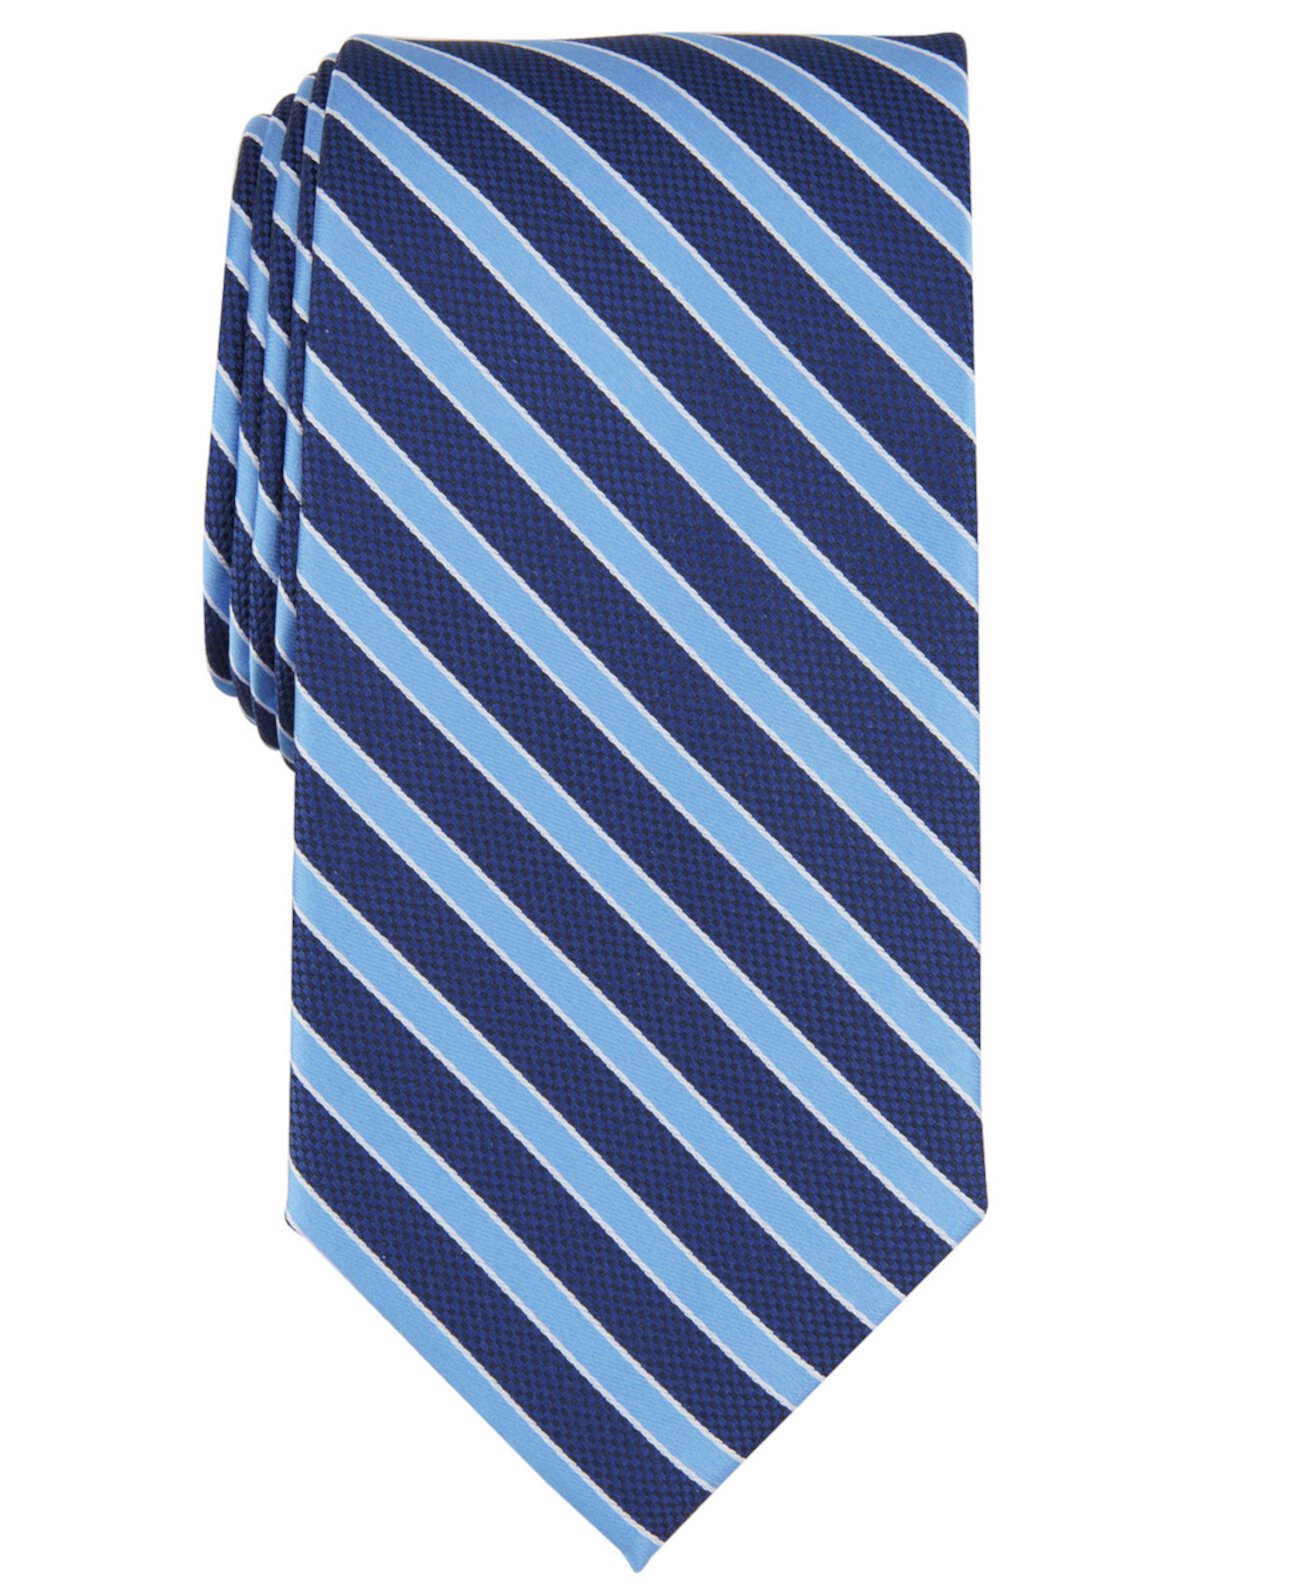 Men's Willard Stripe Tie, Created for Macy's Club Room